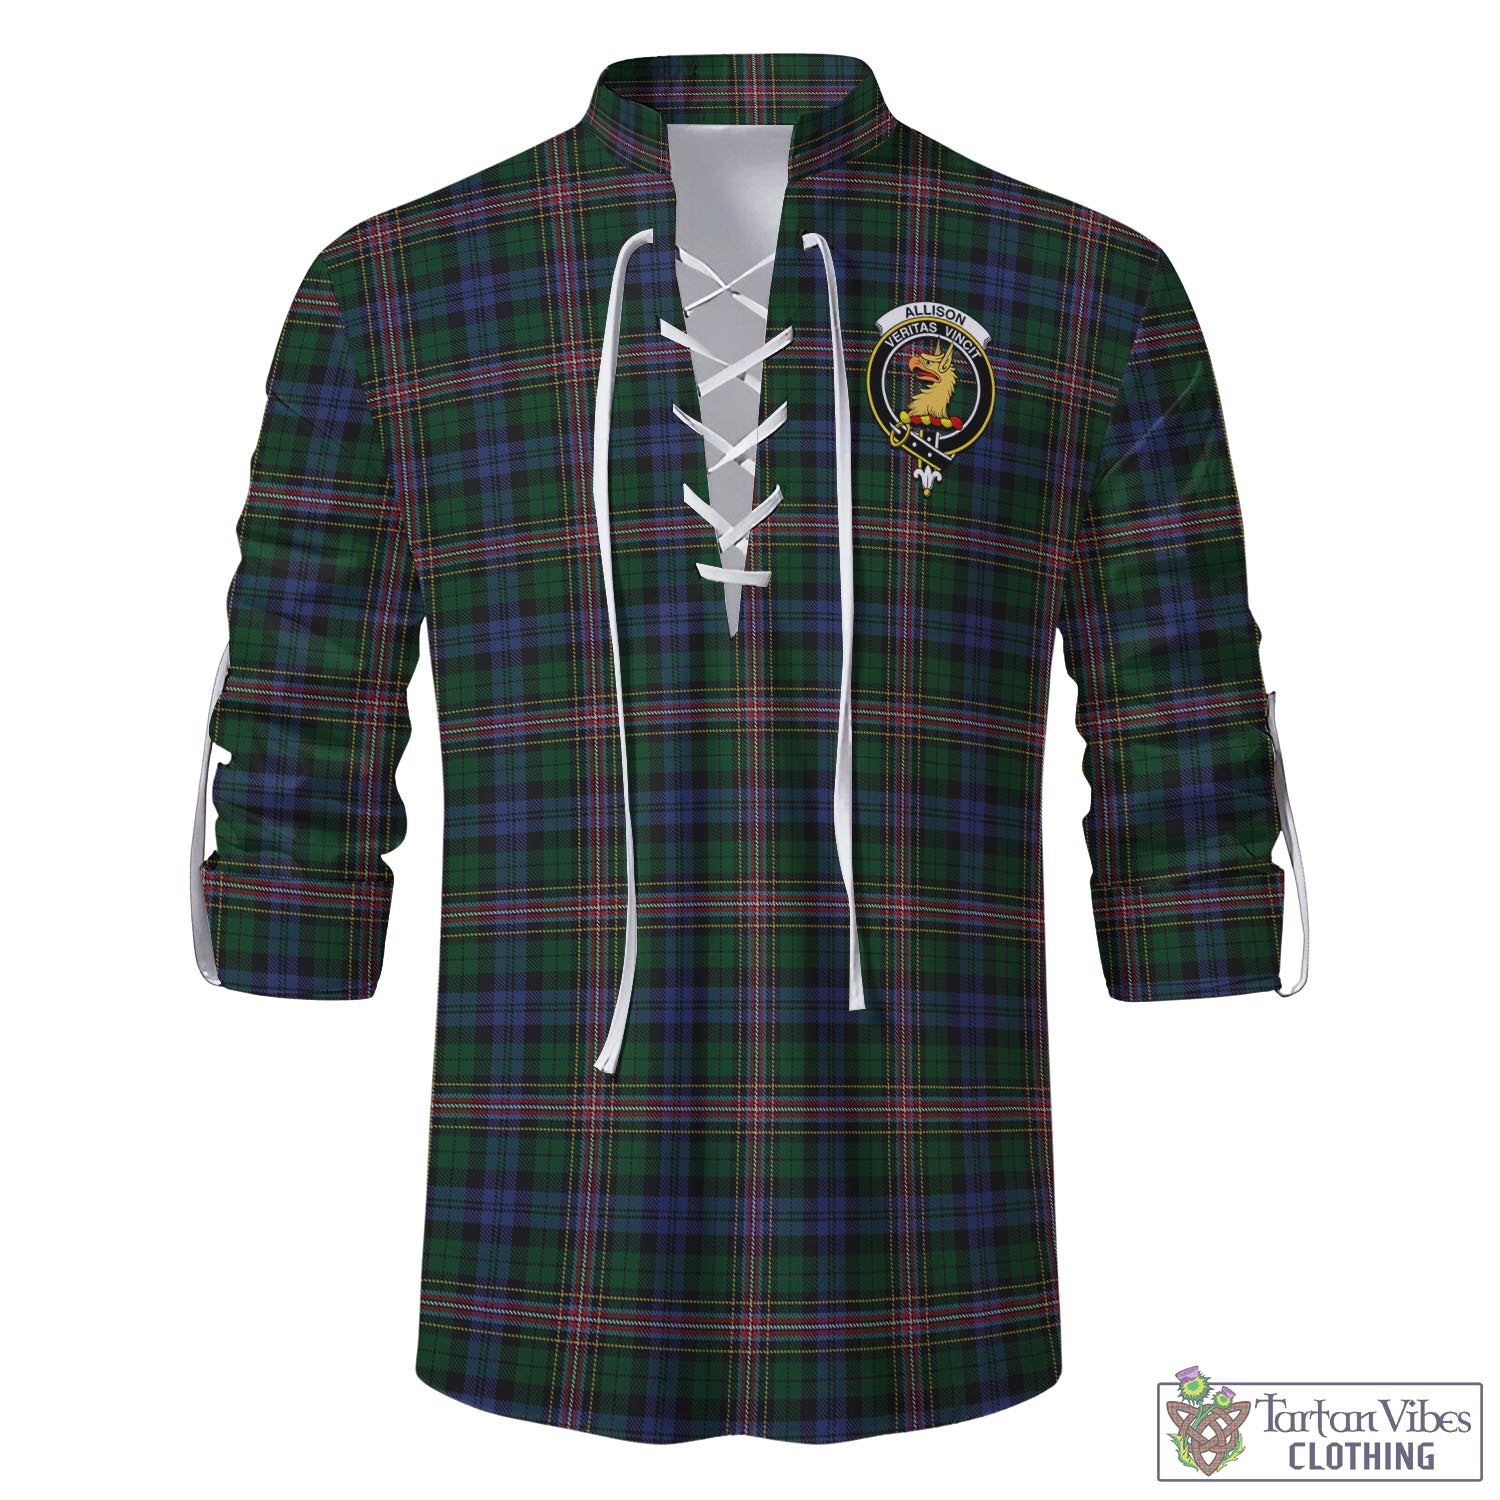 Tartan Vibes Clothing Allison Tartan Men's Scottish Traditional Jacobite Ghillie Kilt Shirt with Family Crest